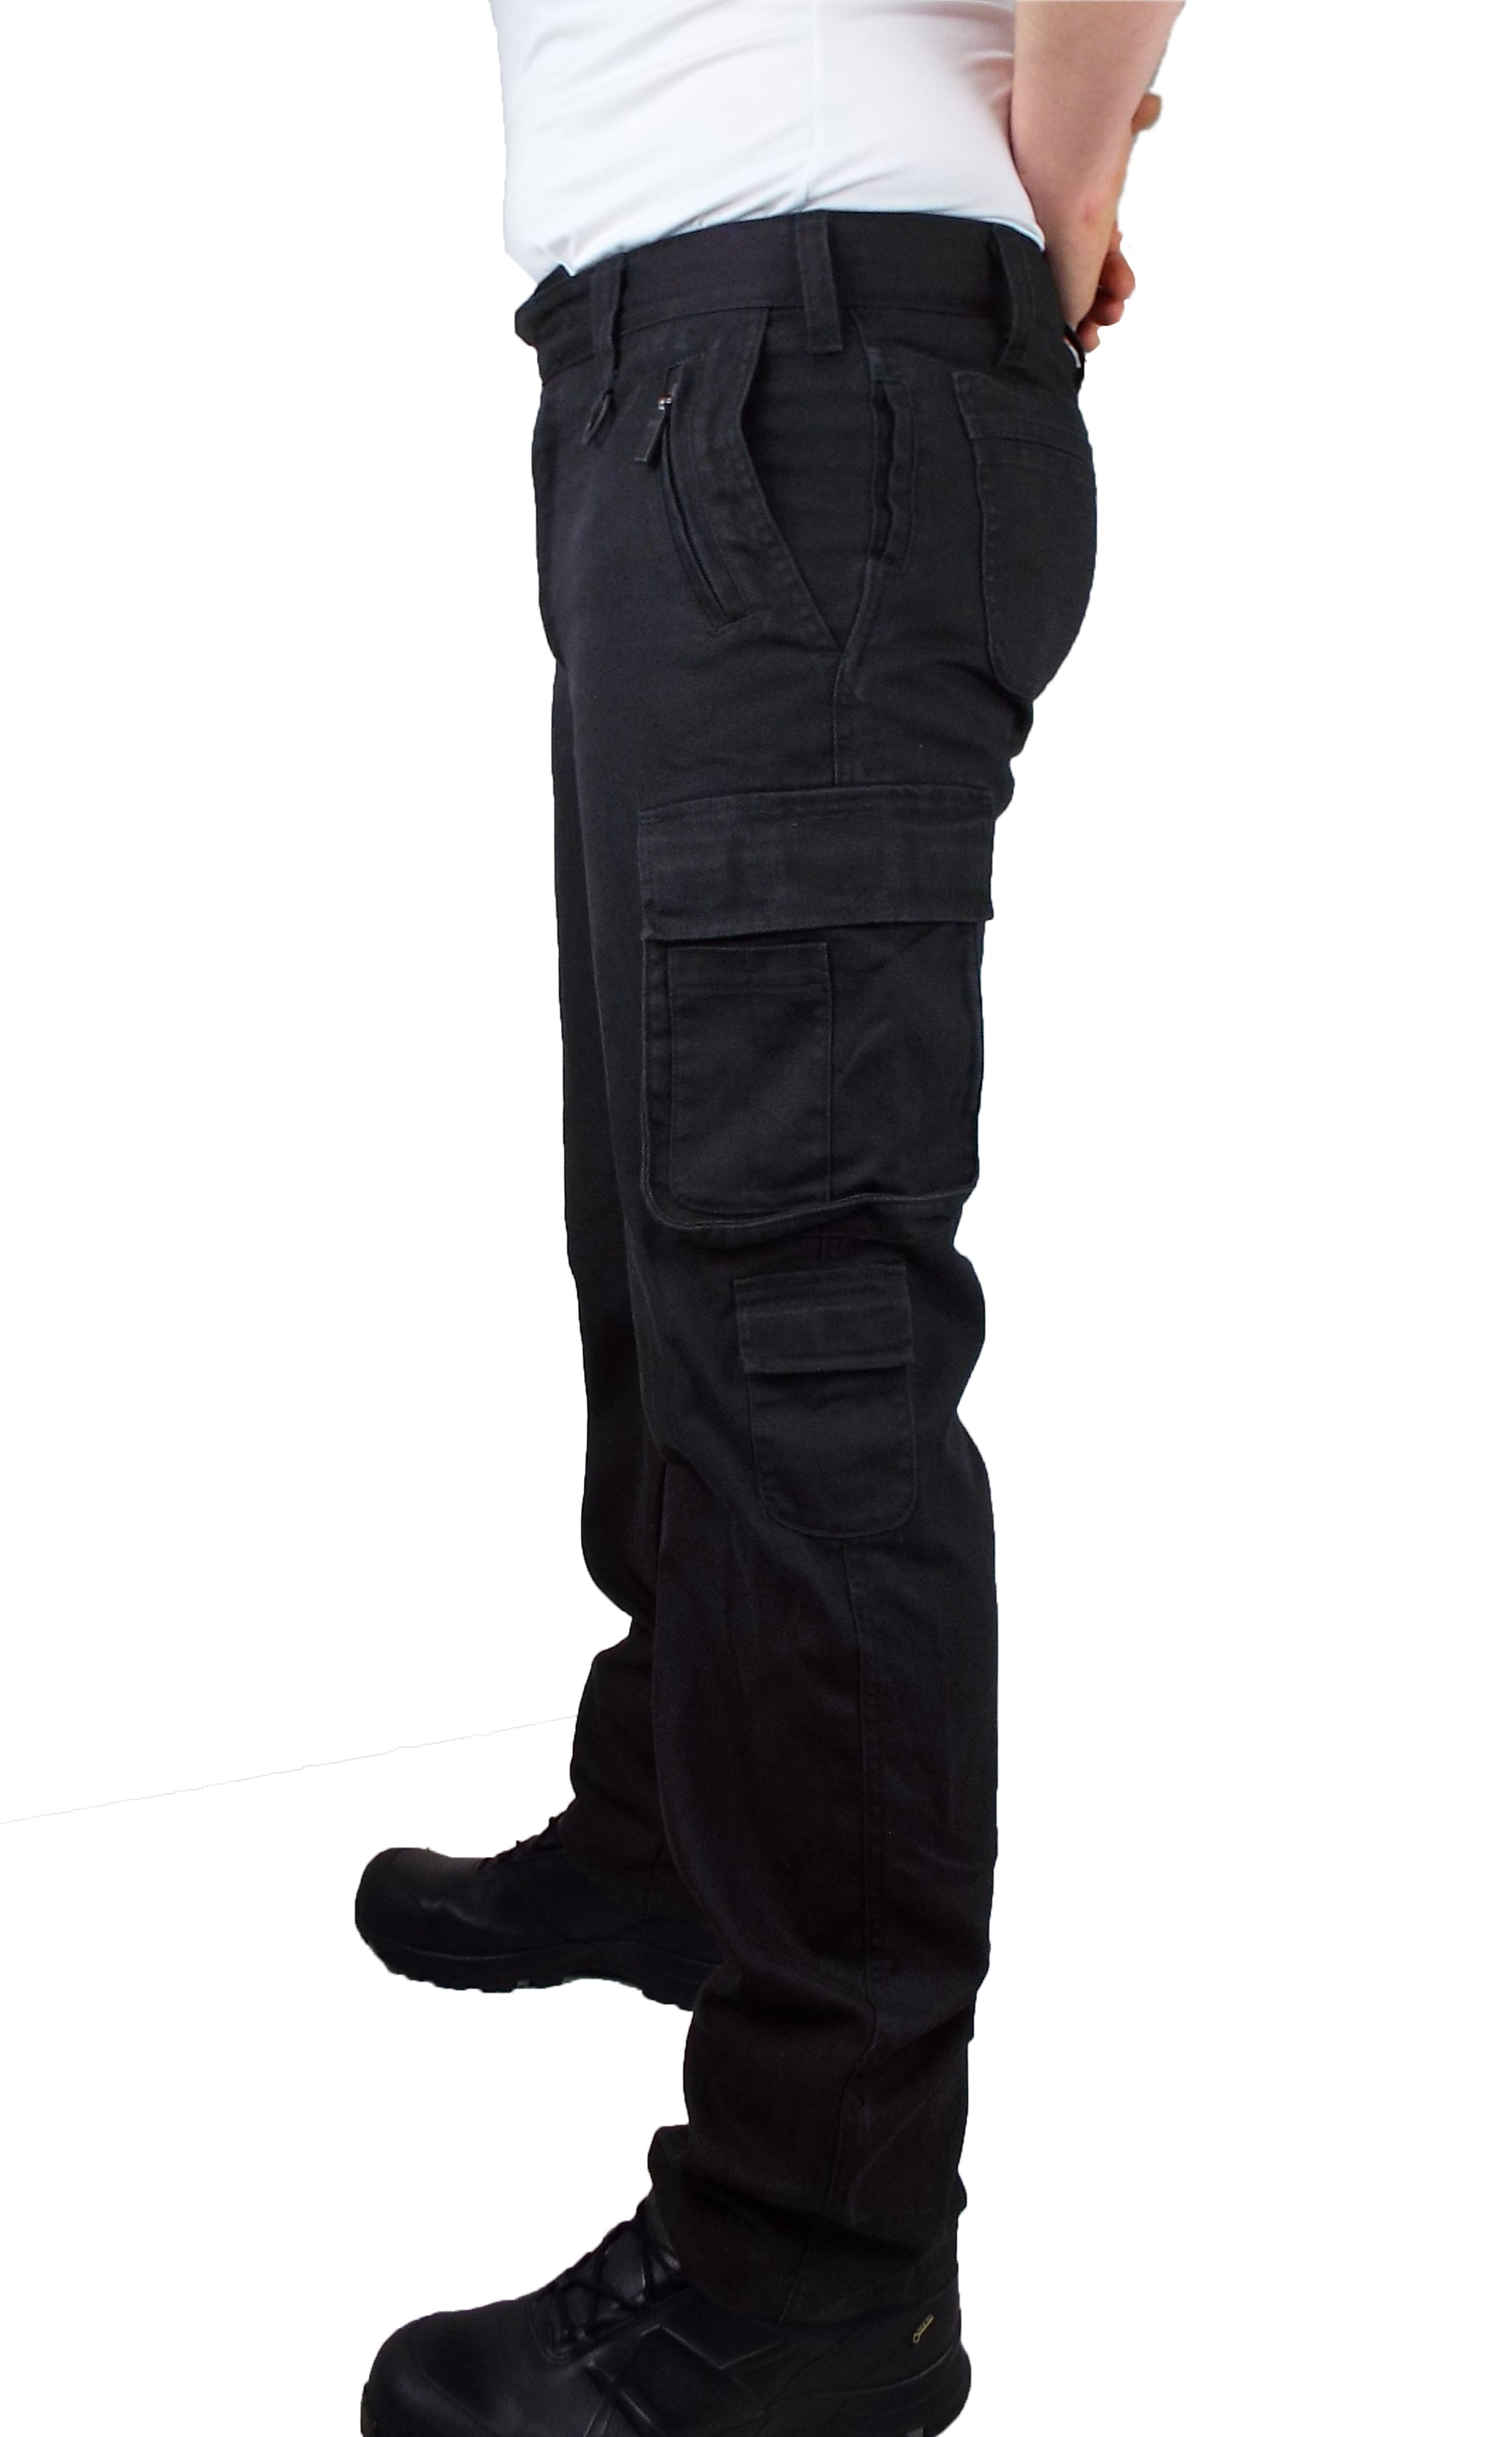 Work pants  HENNER  FHB ORIGINAL GMBH  CO KG  cotton  leather  black